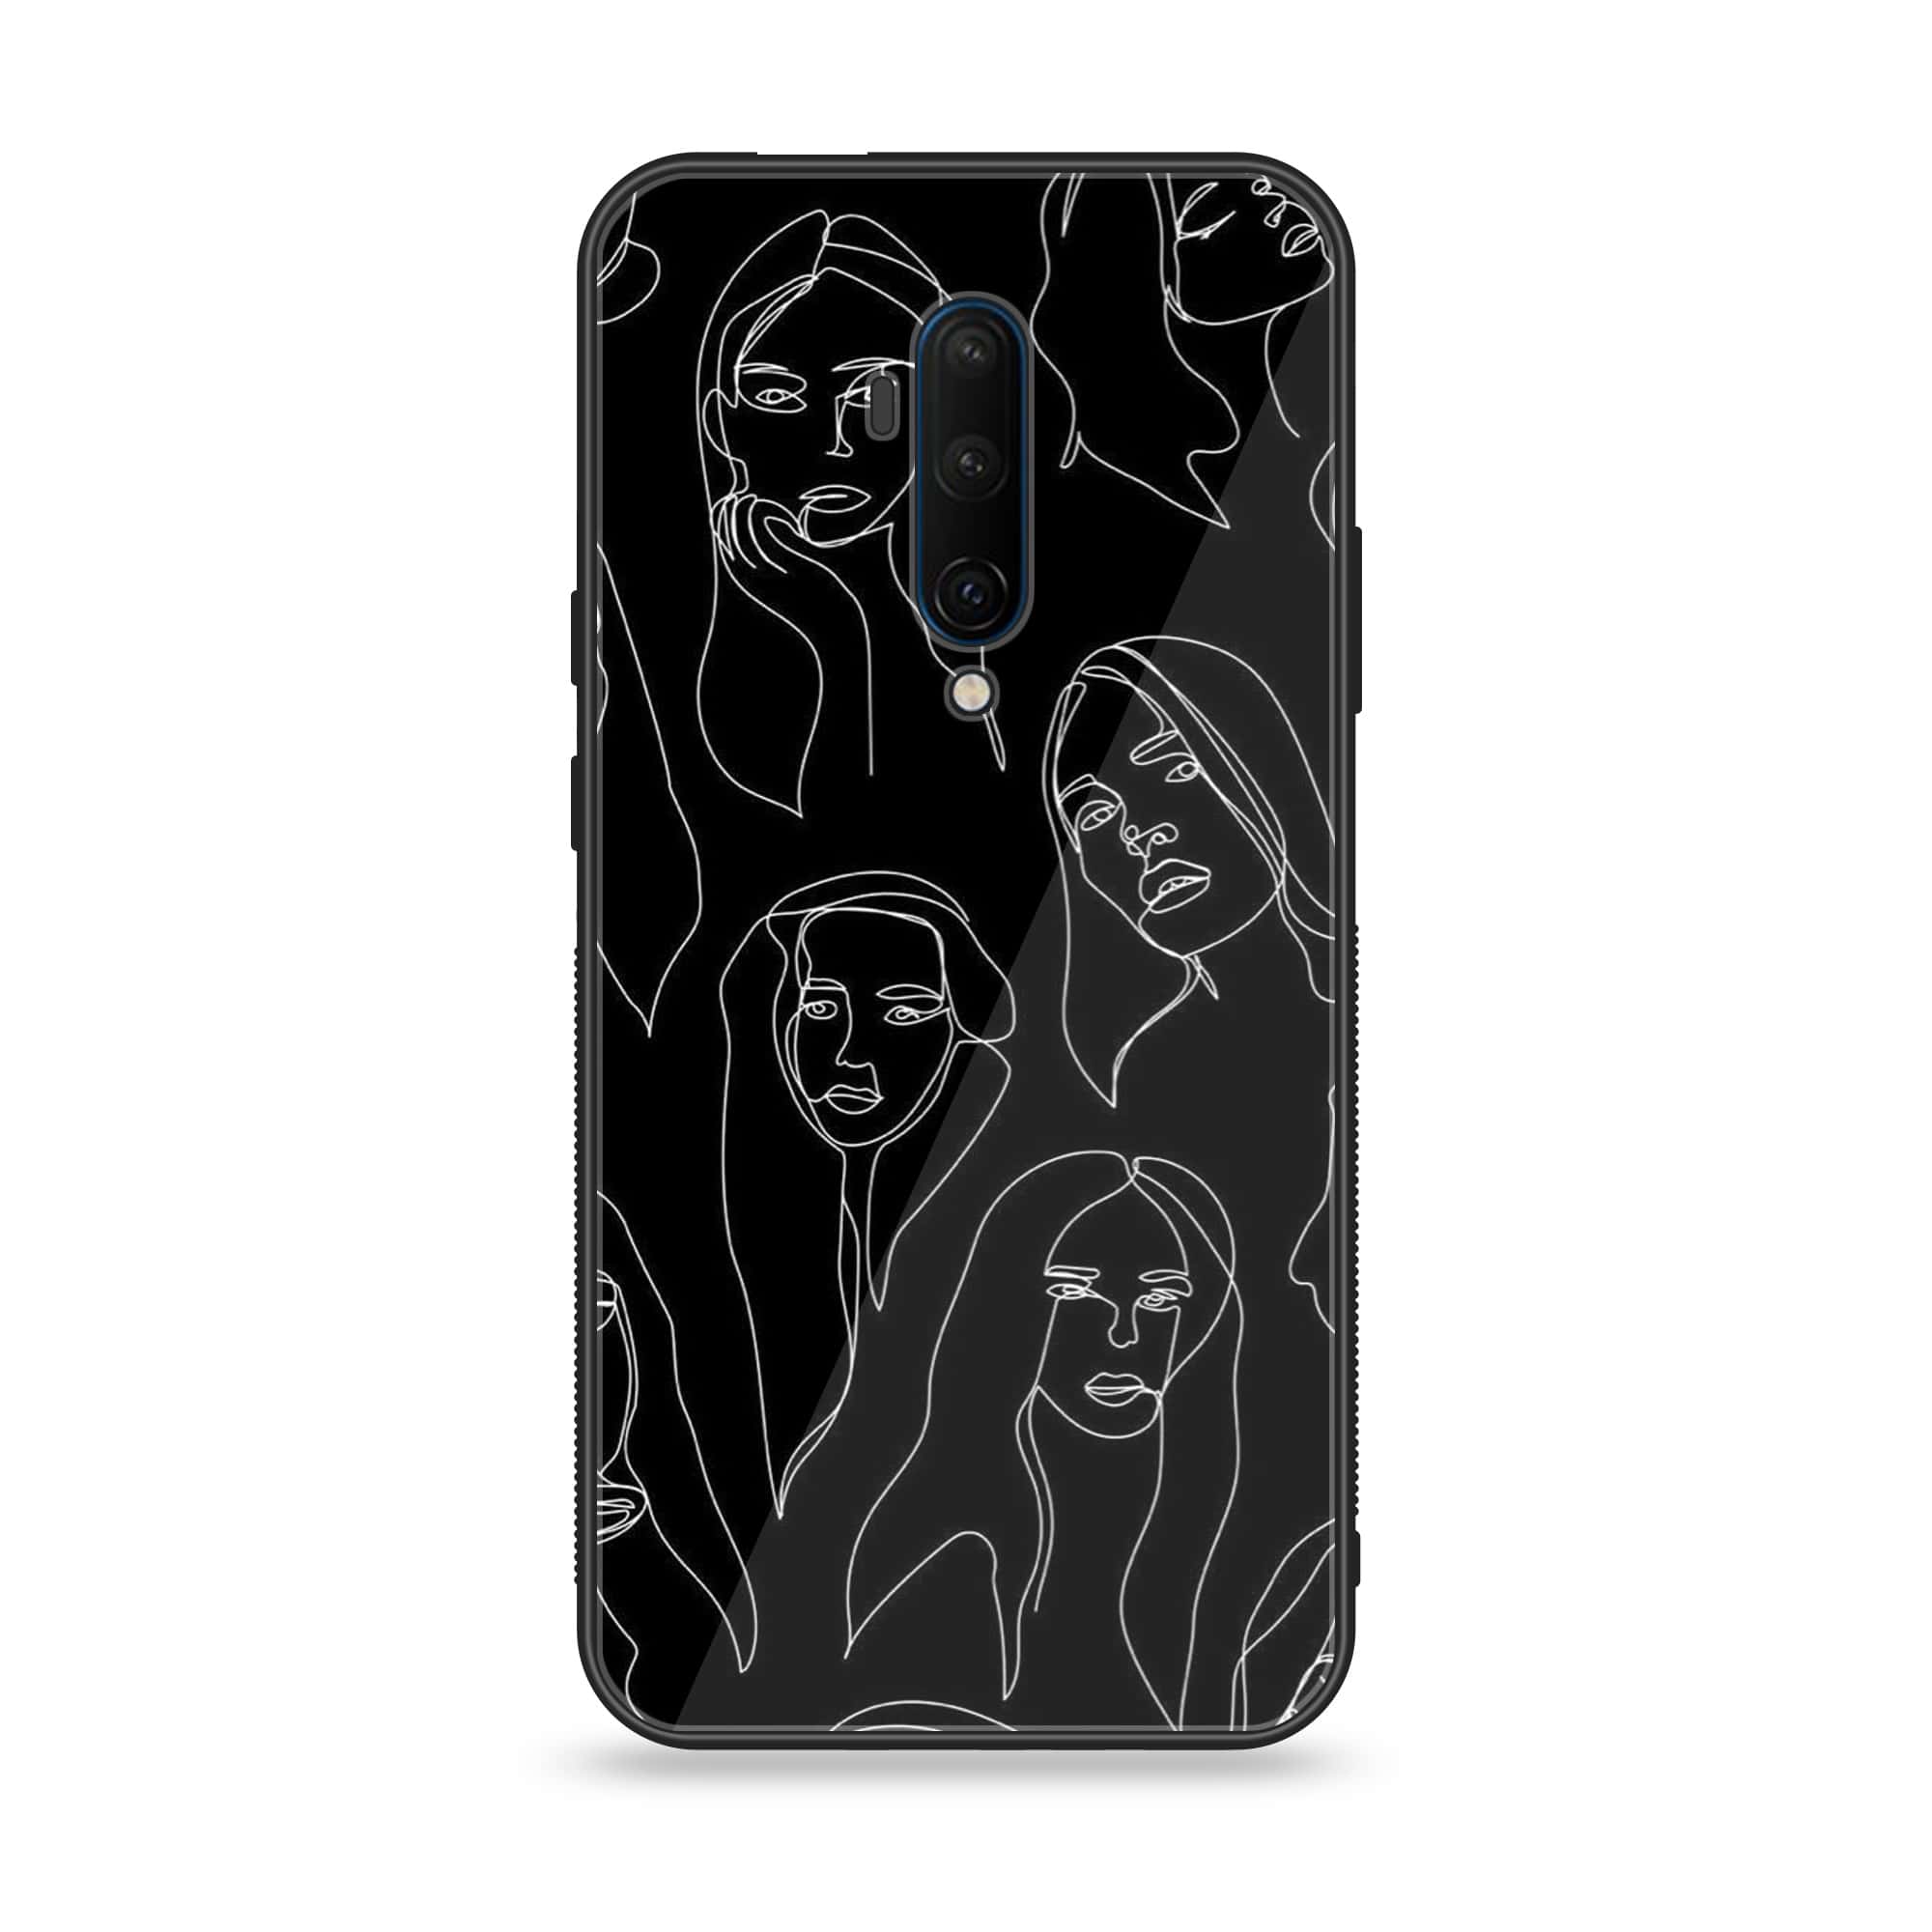 OnePlus 7T Pro - Girls Line Art Series - Premium Printed Glass soft Bumper shock Proof Case